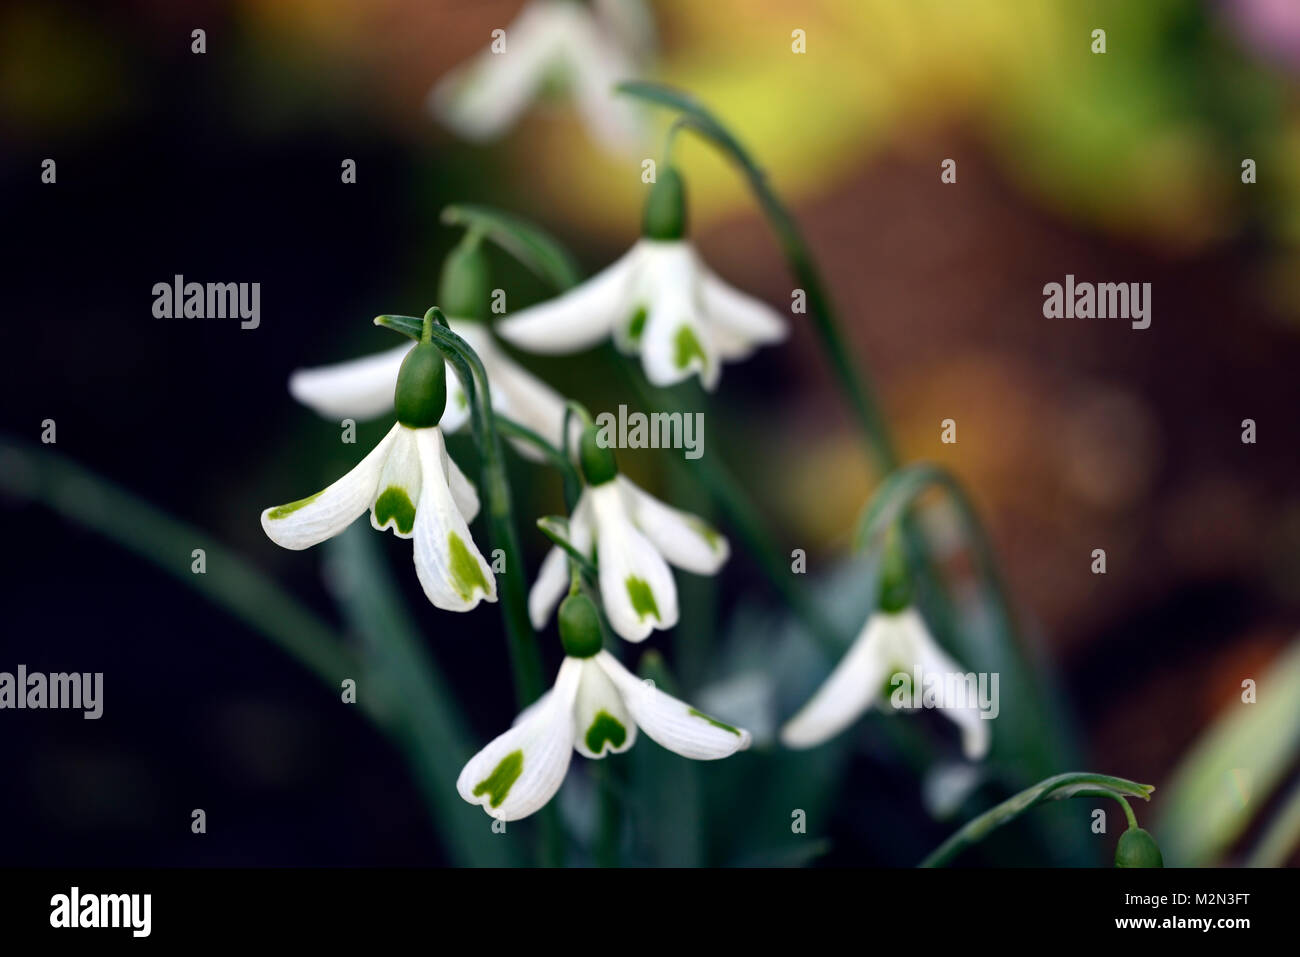 galanthus trumps, snowdrop, snowdrops, spring, flower, flowers, flowering, green,mark,markings,distinct,distinctive,RM Floral Stock Photo